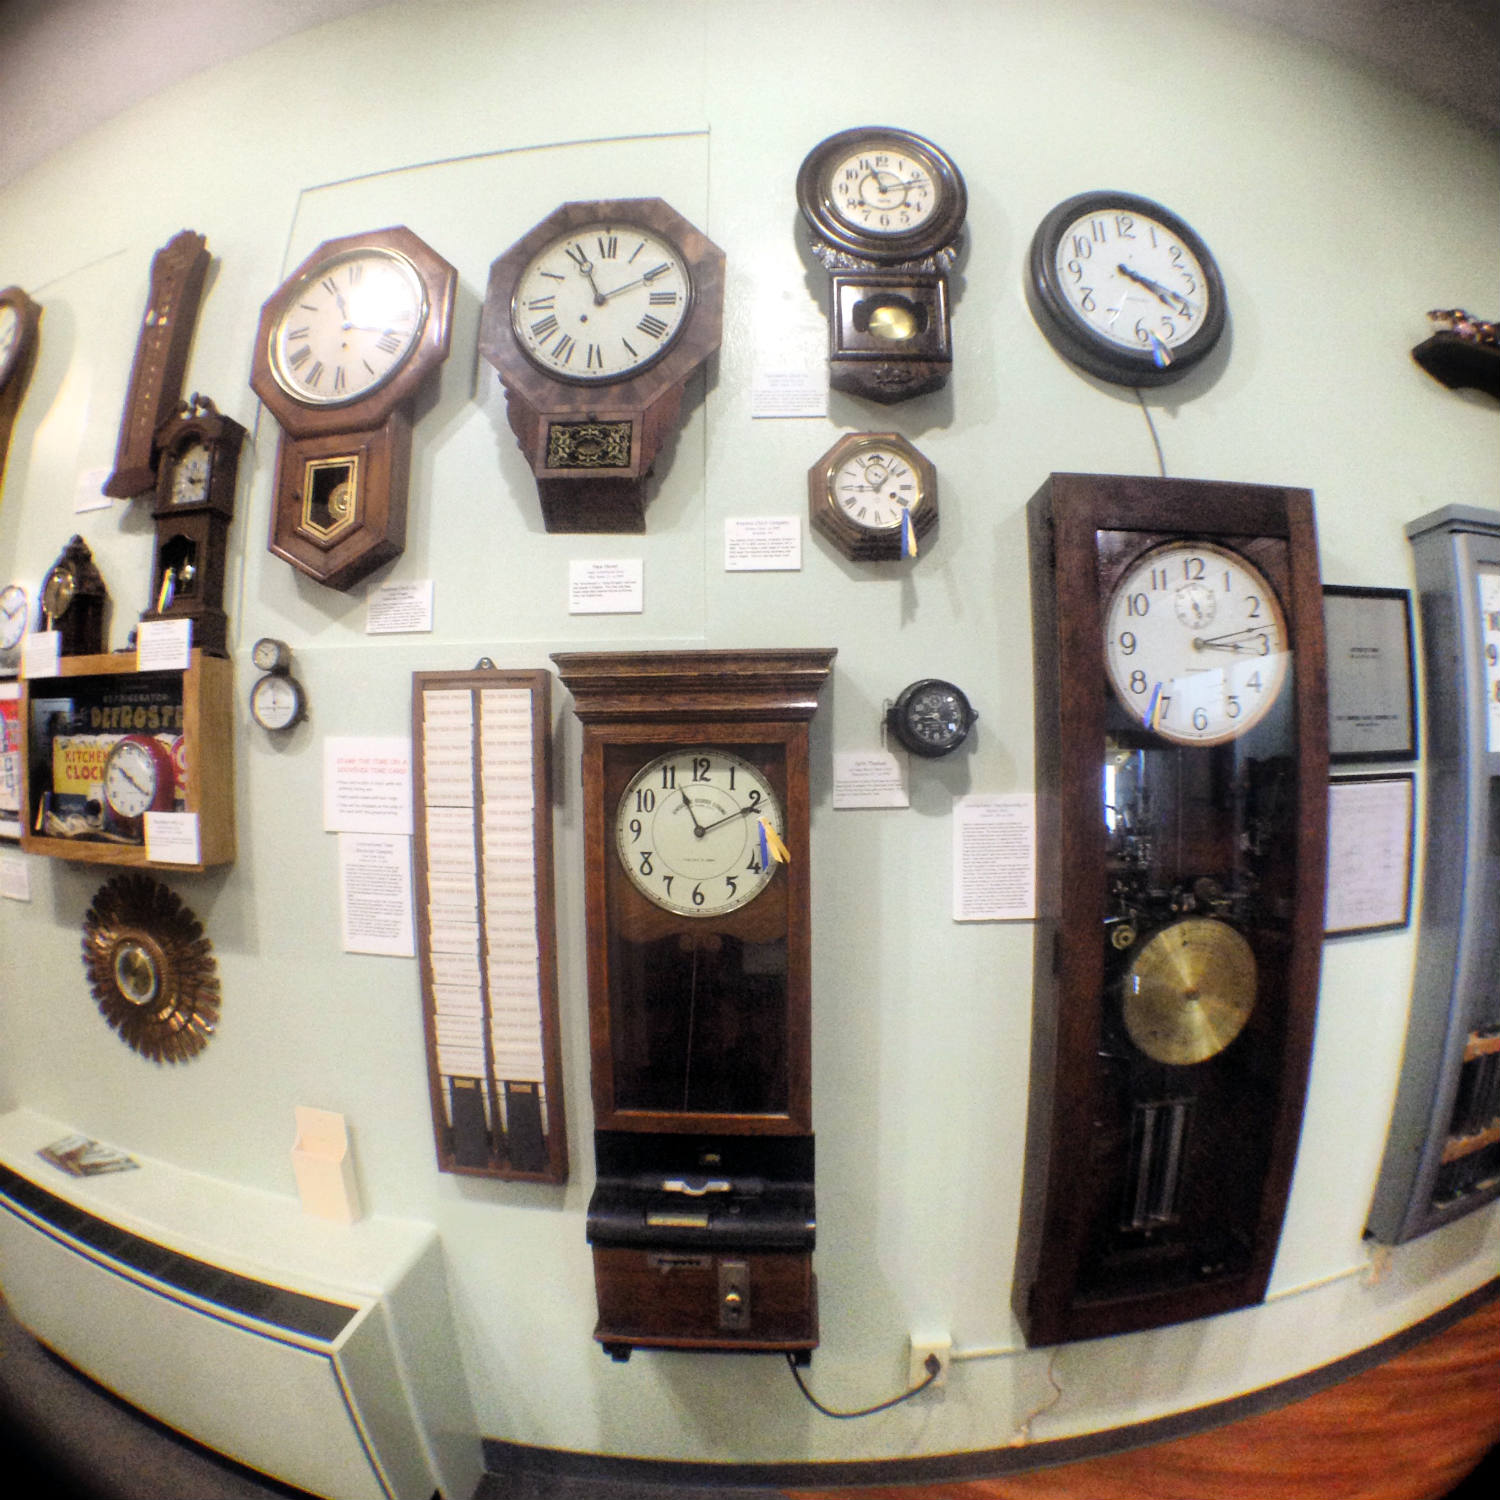 Clock Displays in the Hoffman Clock Museum in Newark, New York